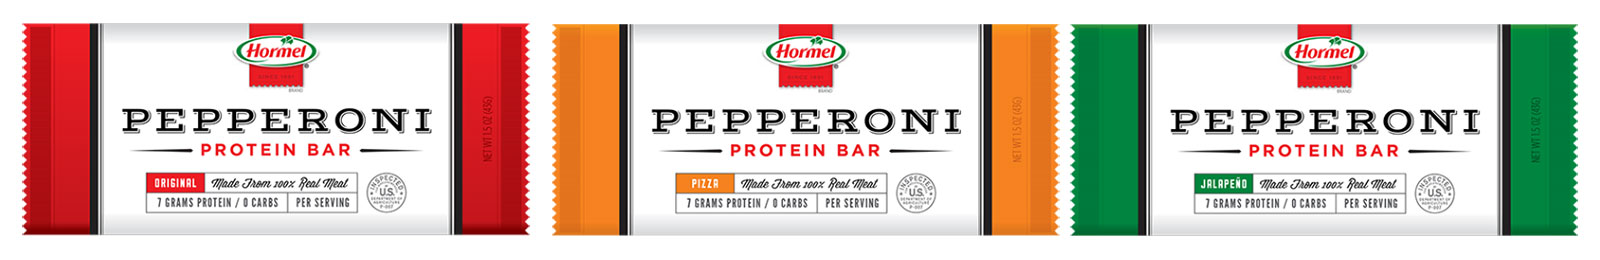 Hormel Protein Bars